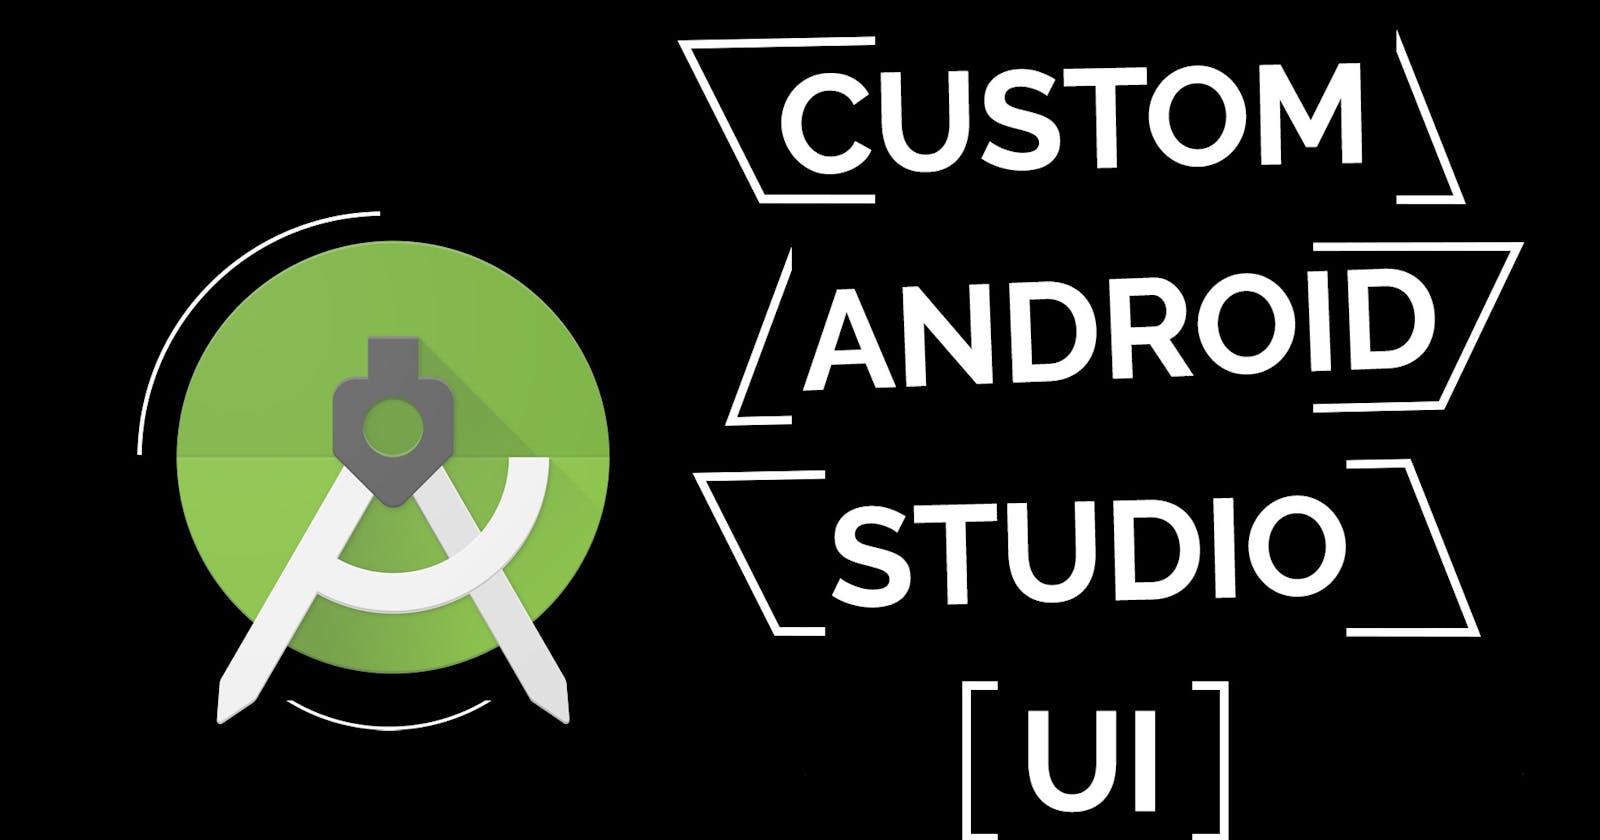 Customize Android Studio UI